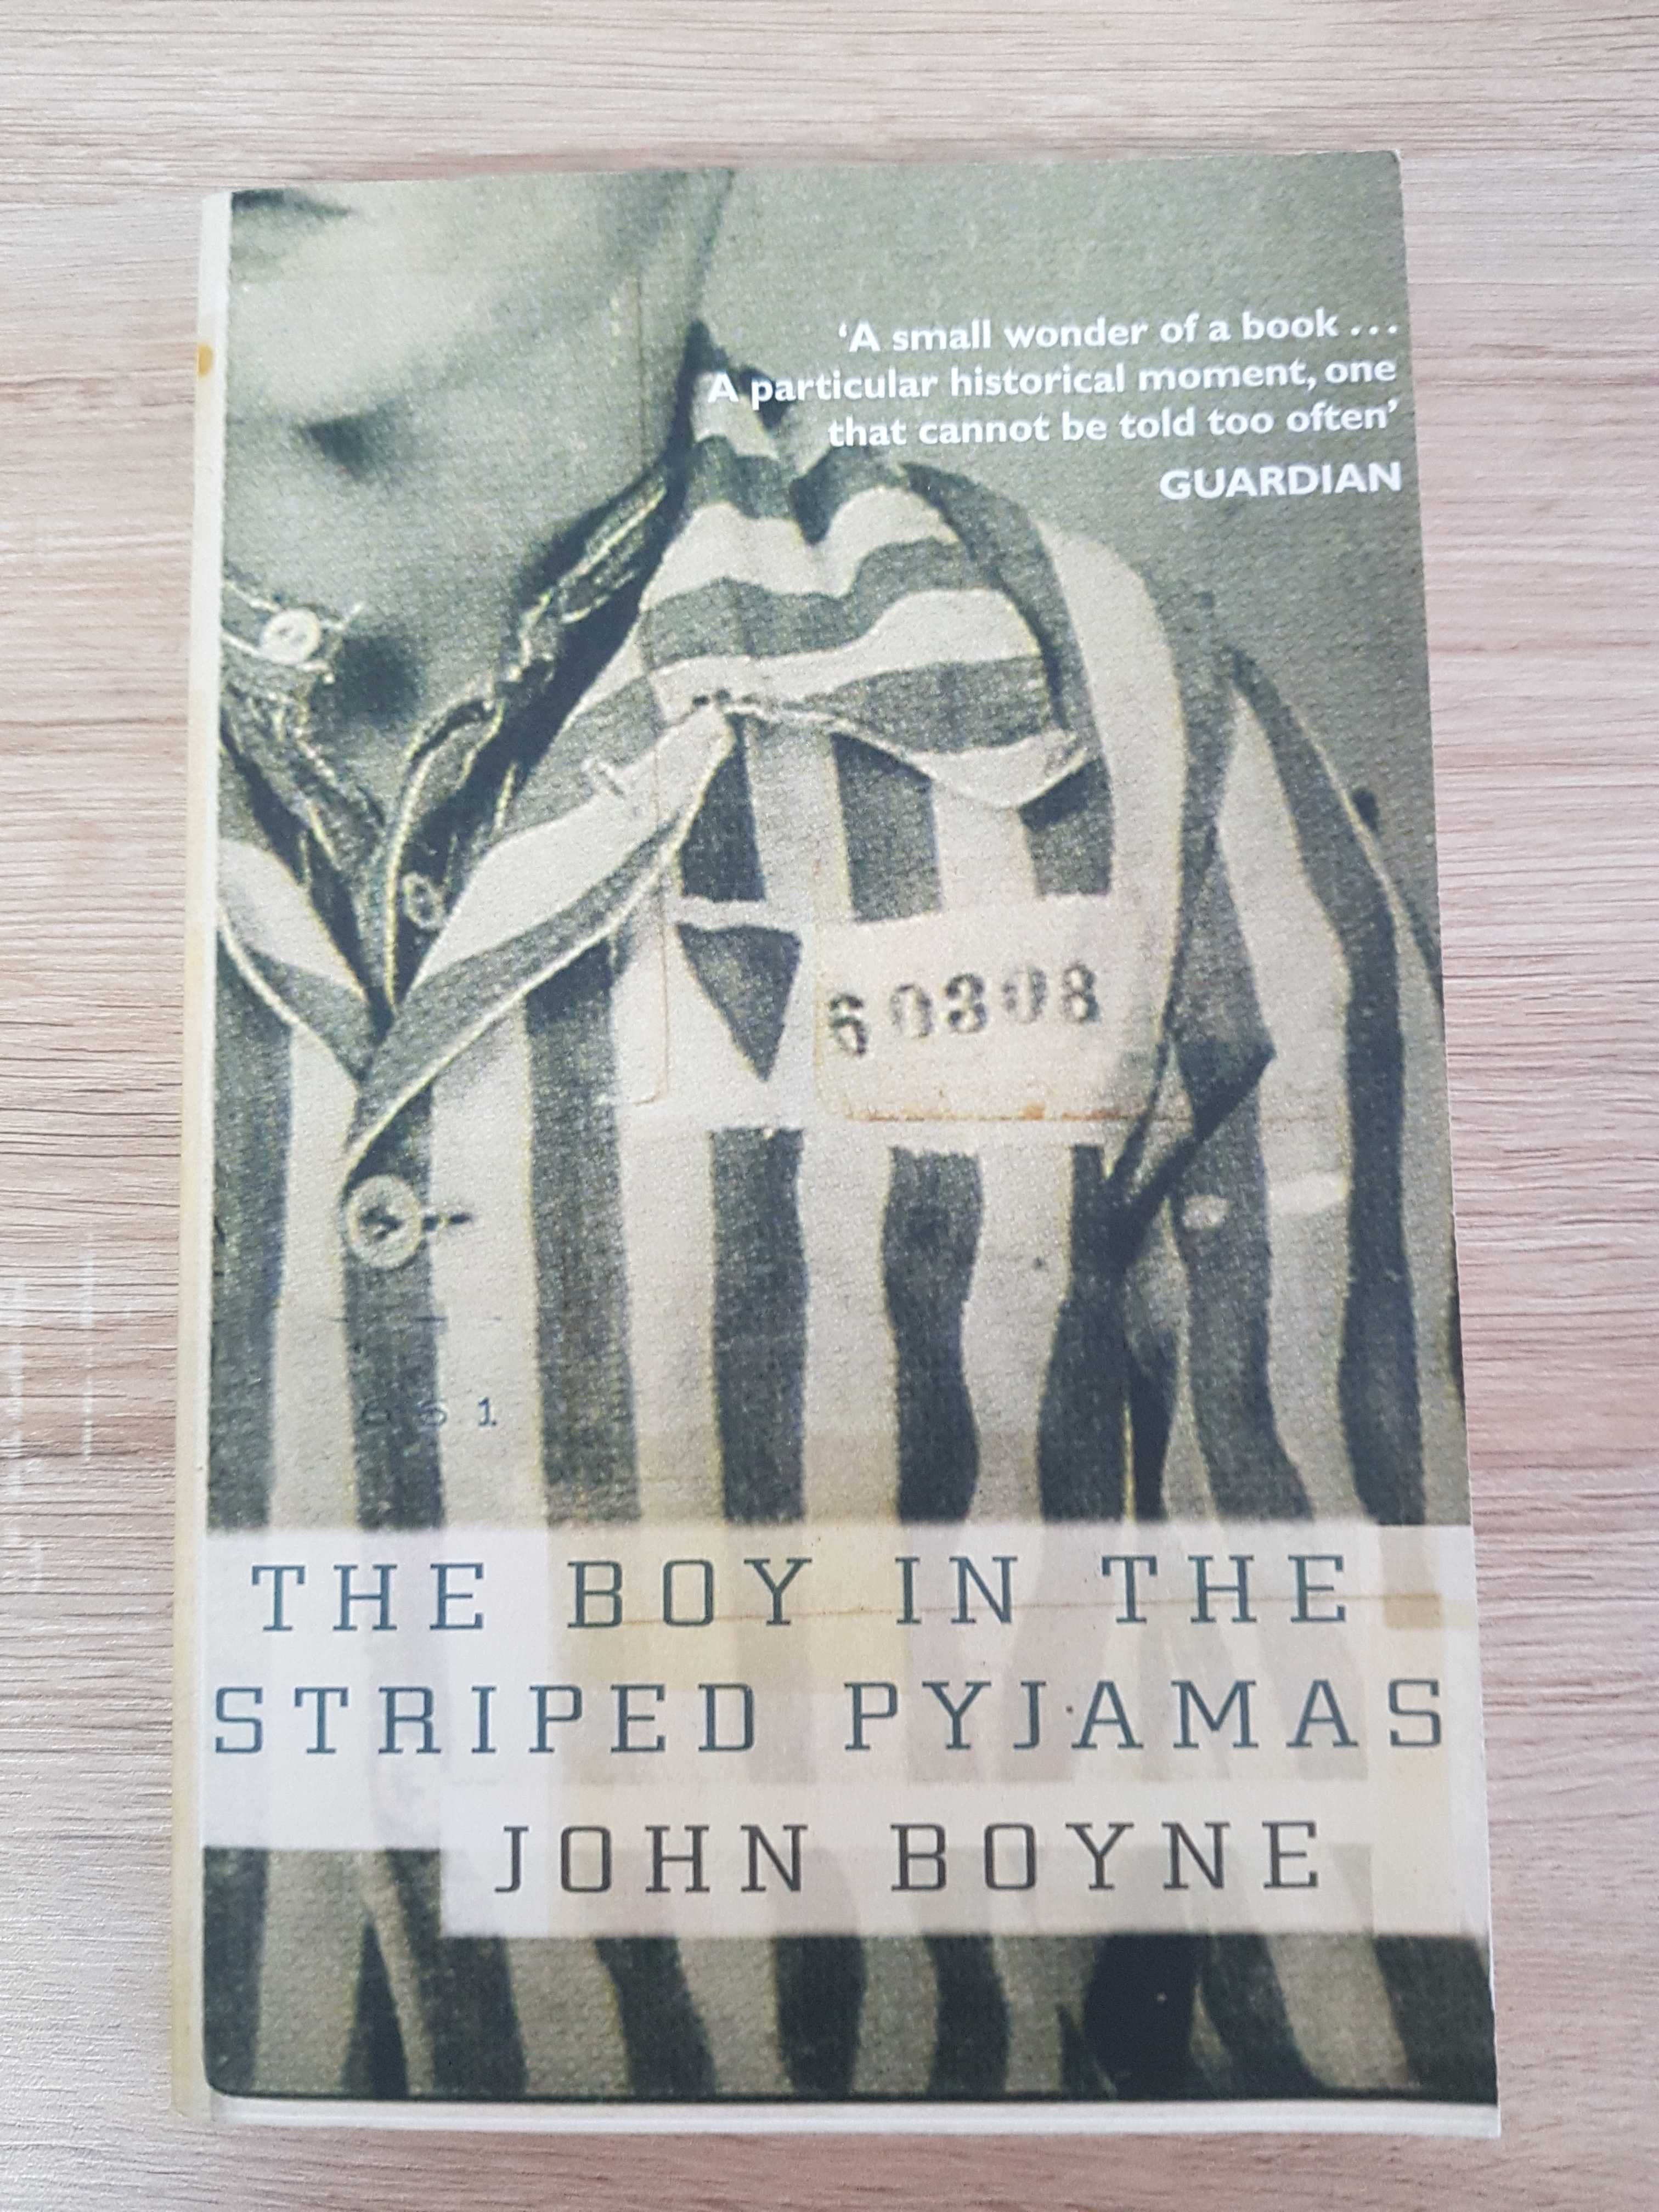 The boy in the stripped pyjamas - John Boyne